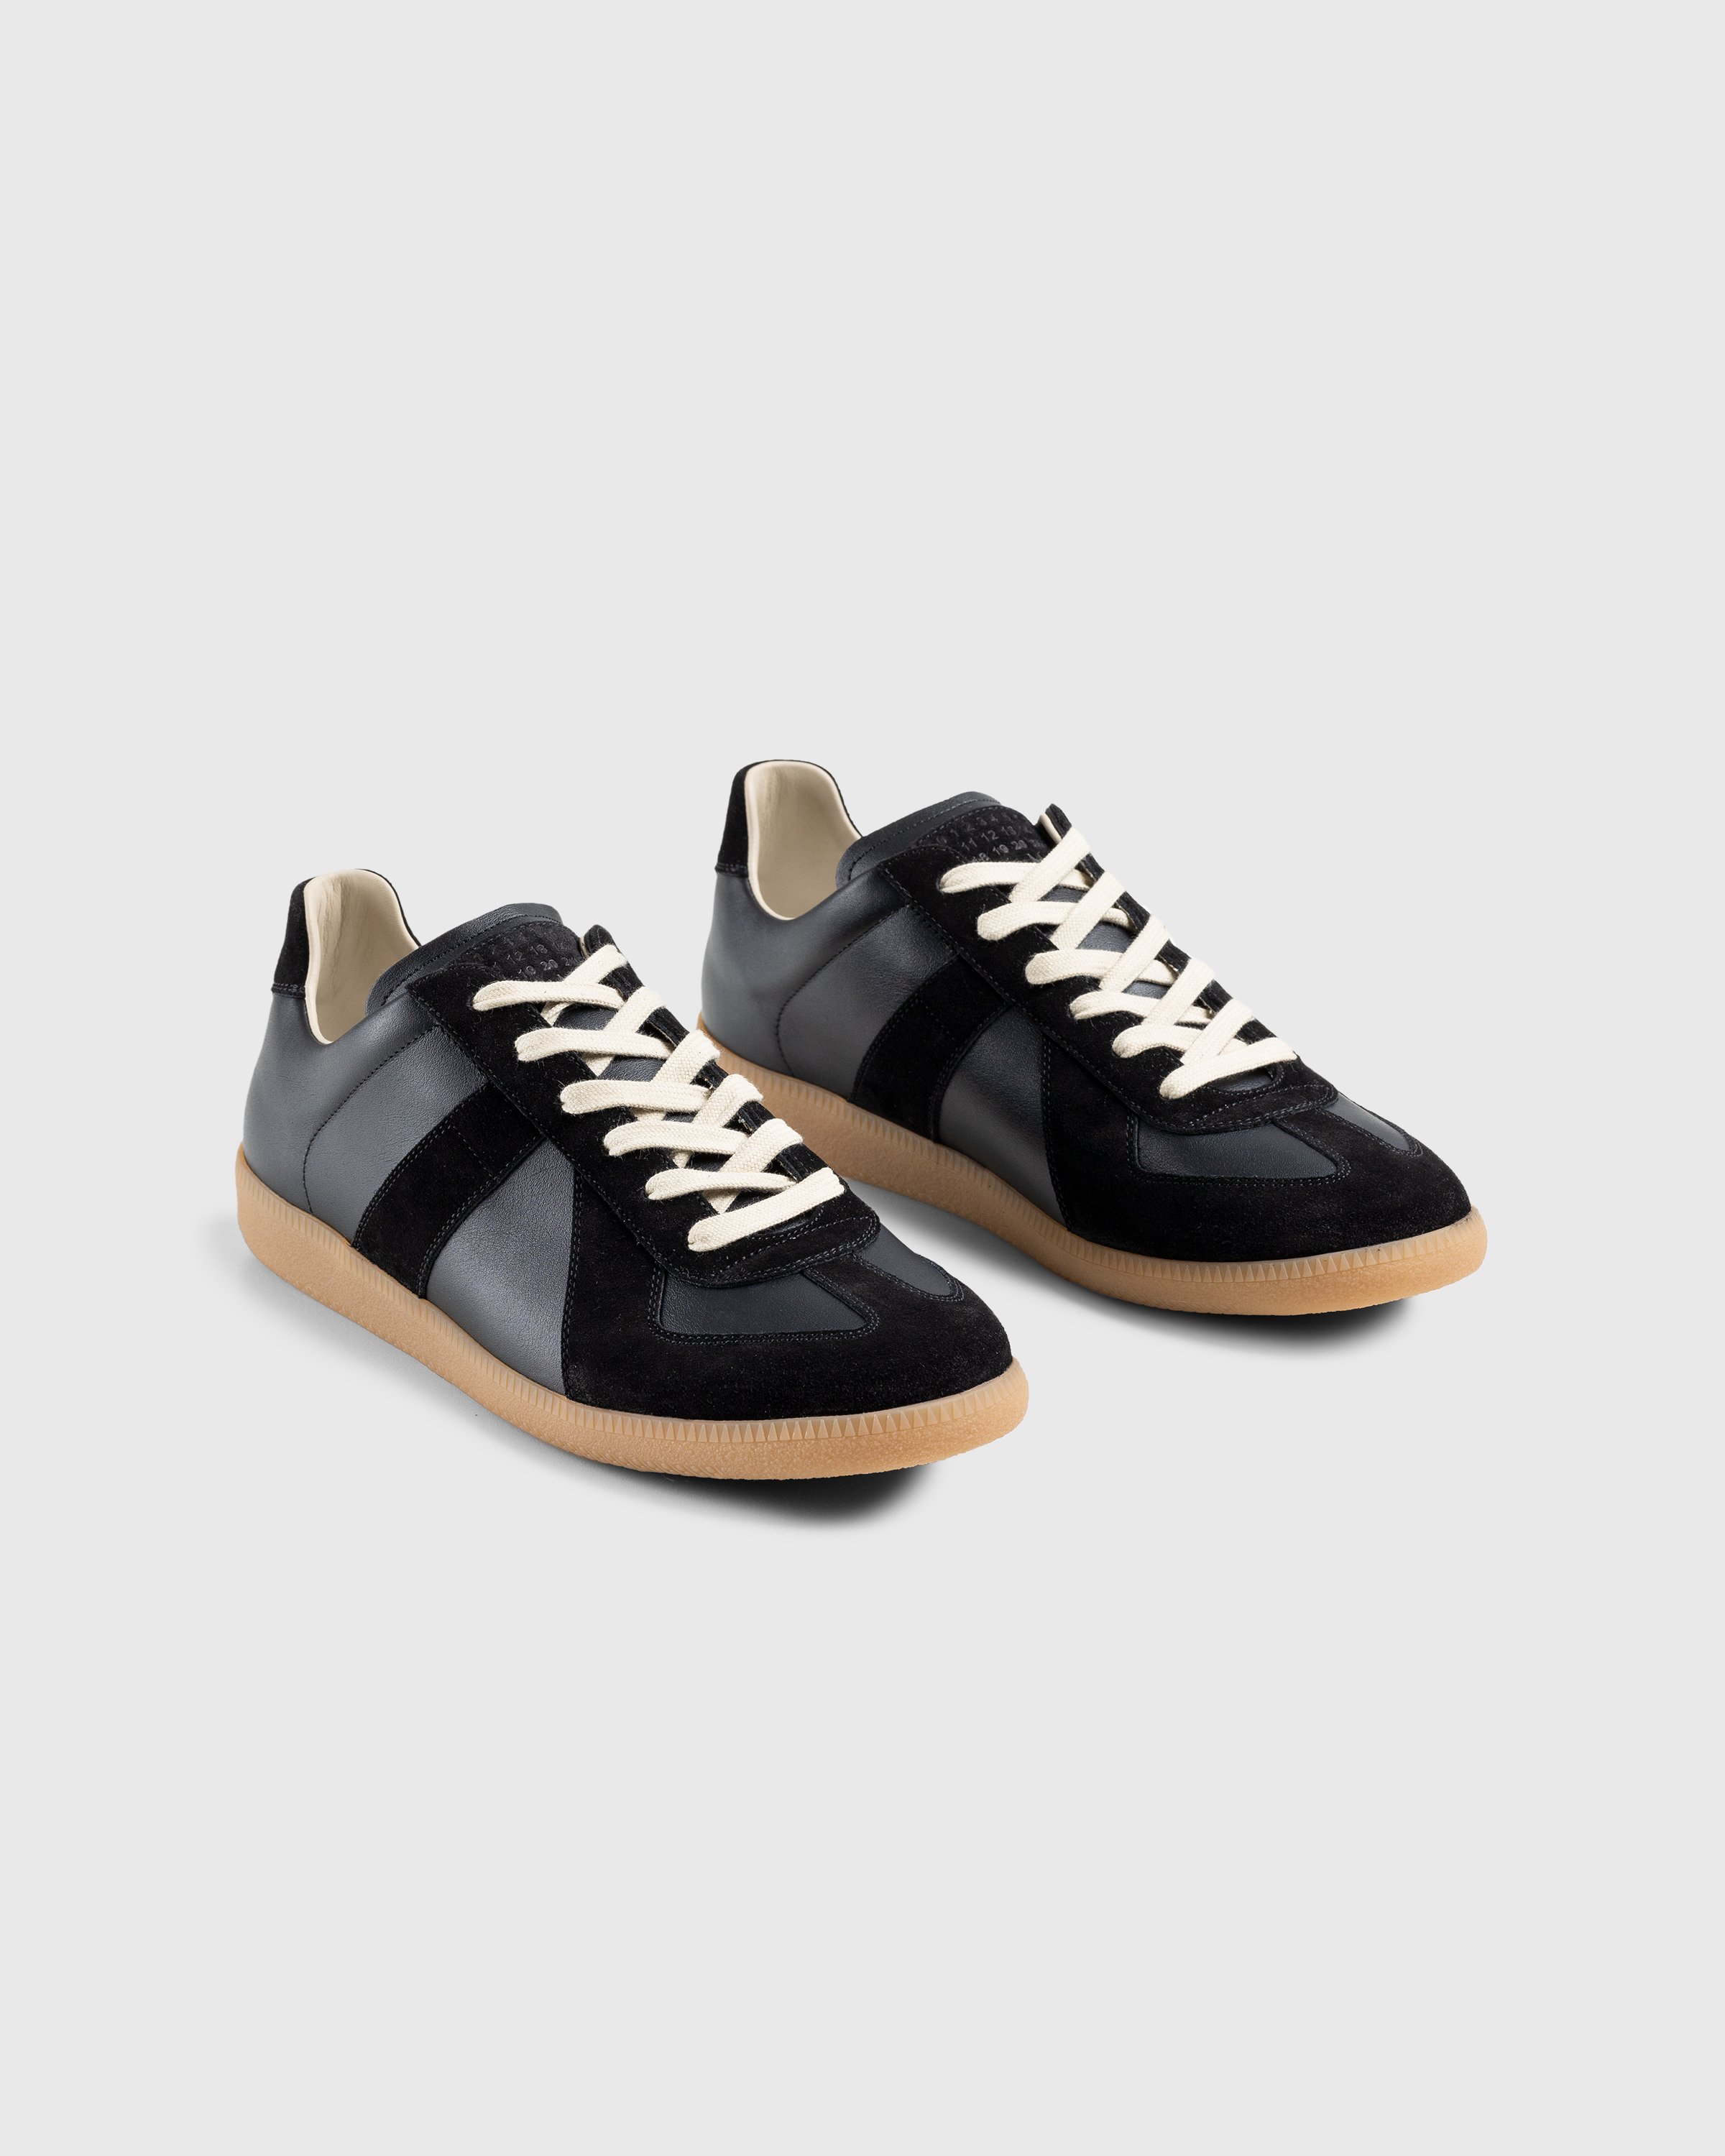 Maison Margiela - Leather Replica Sneakers Black - Footwear - Black - Image 3